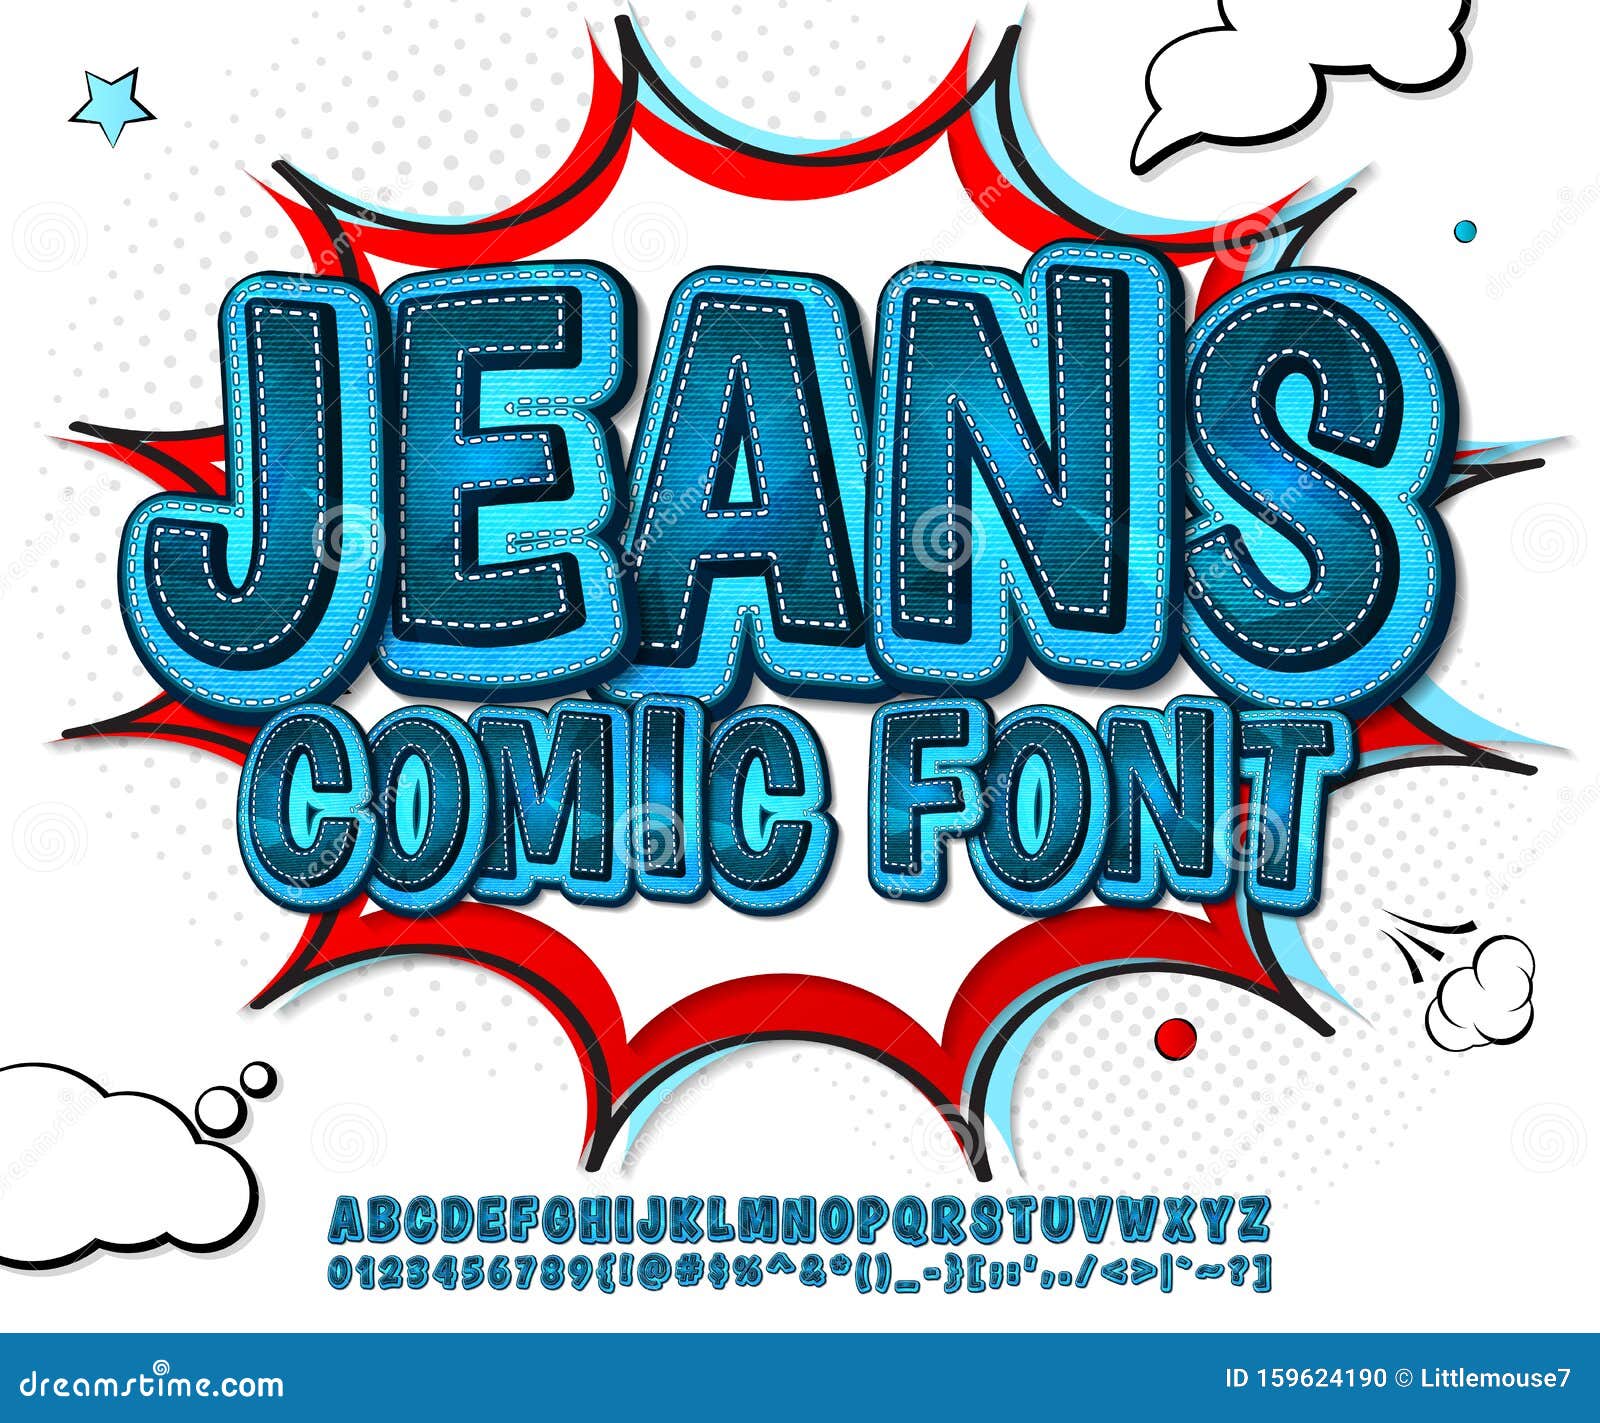 jeans comic